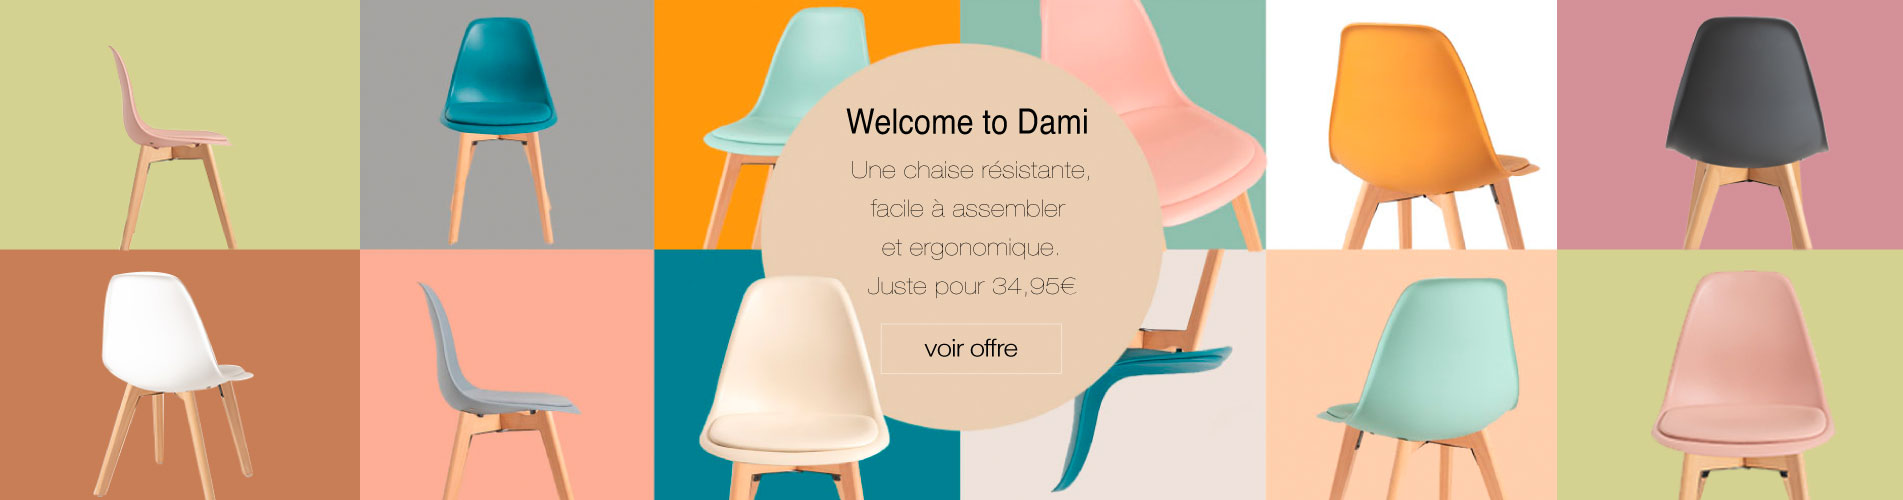 Promotion Welcome Dami - Cadeaux Miguel 